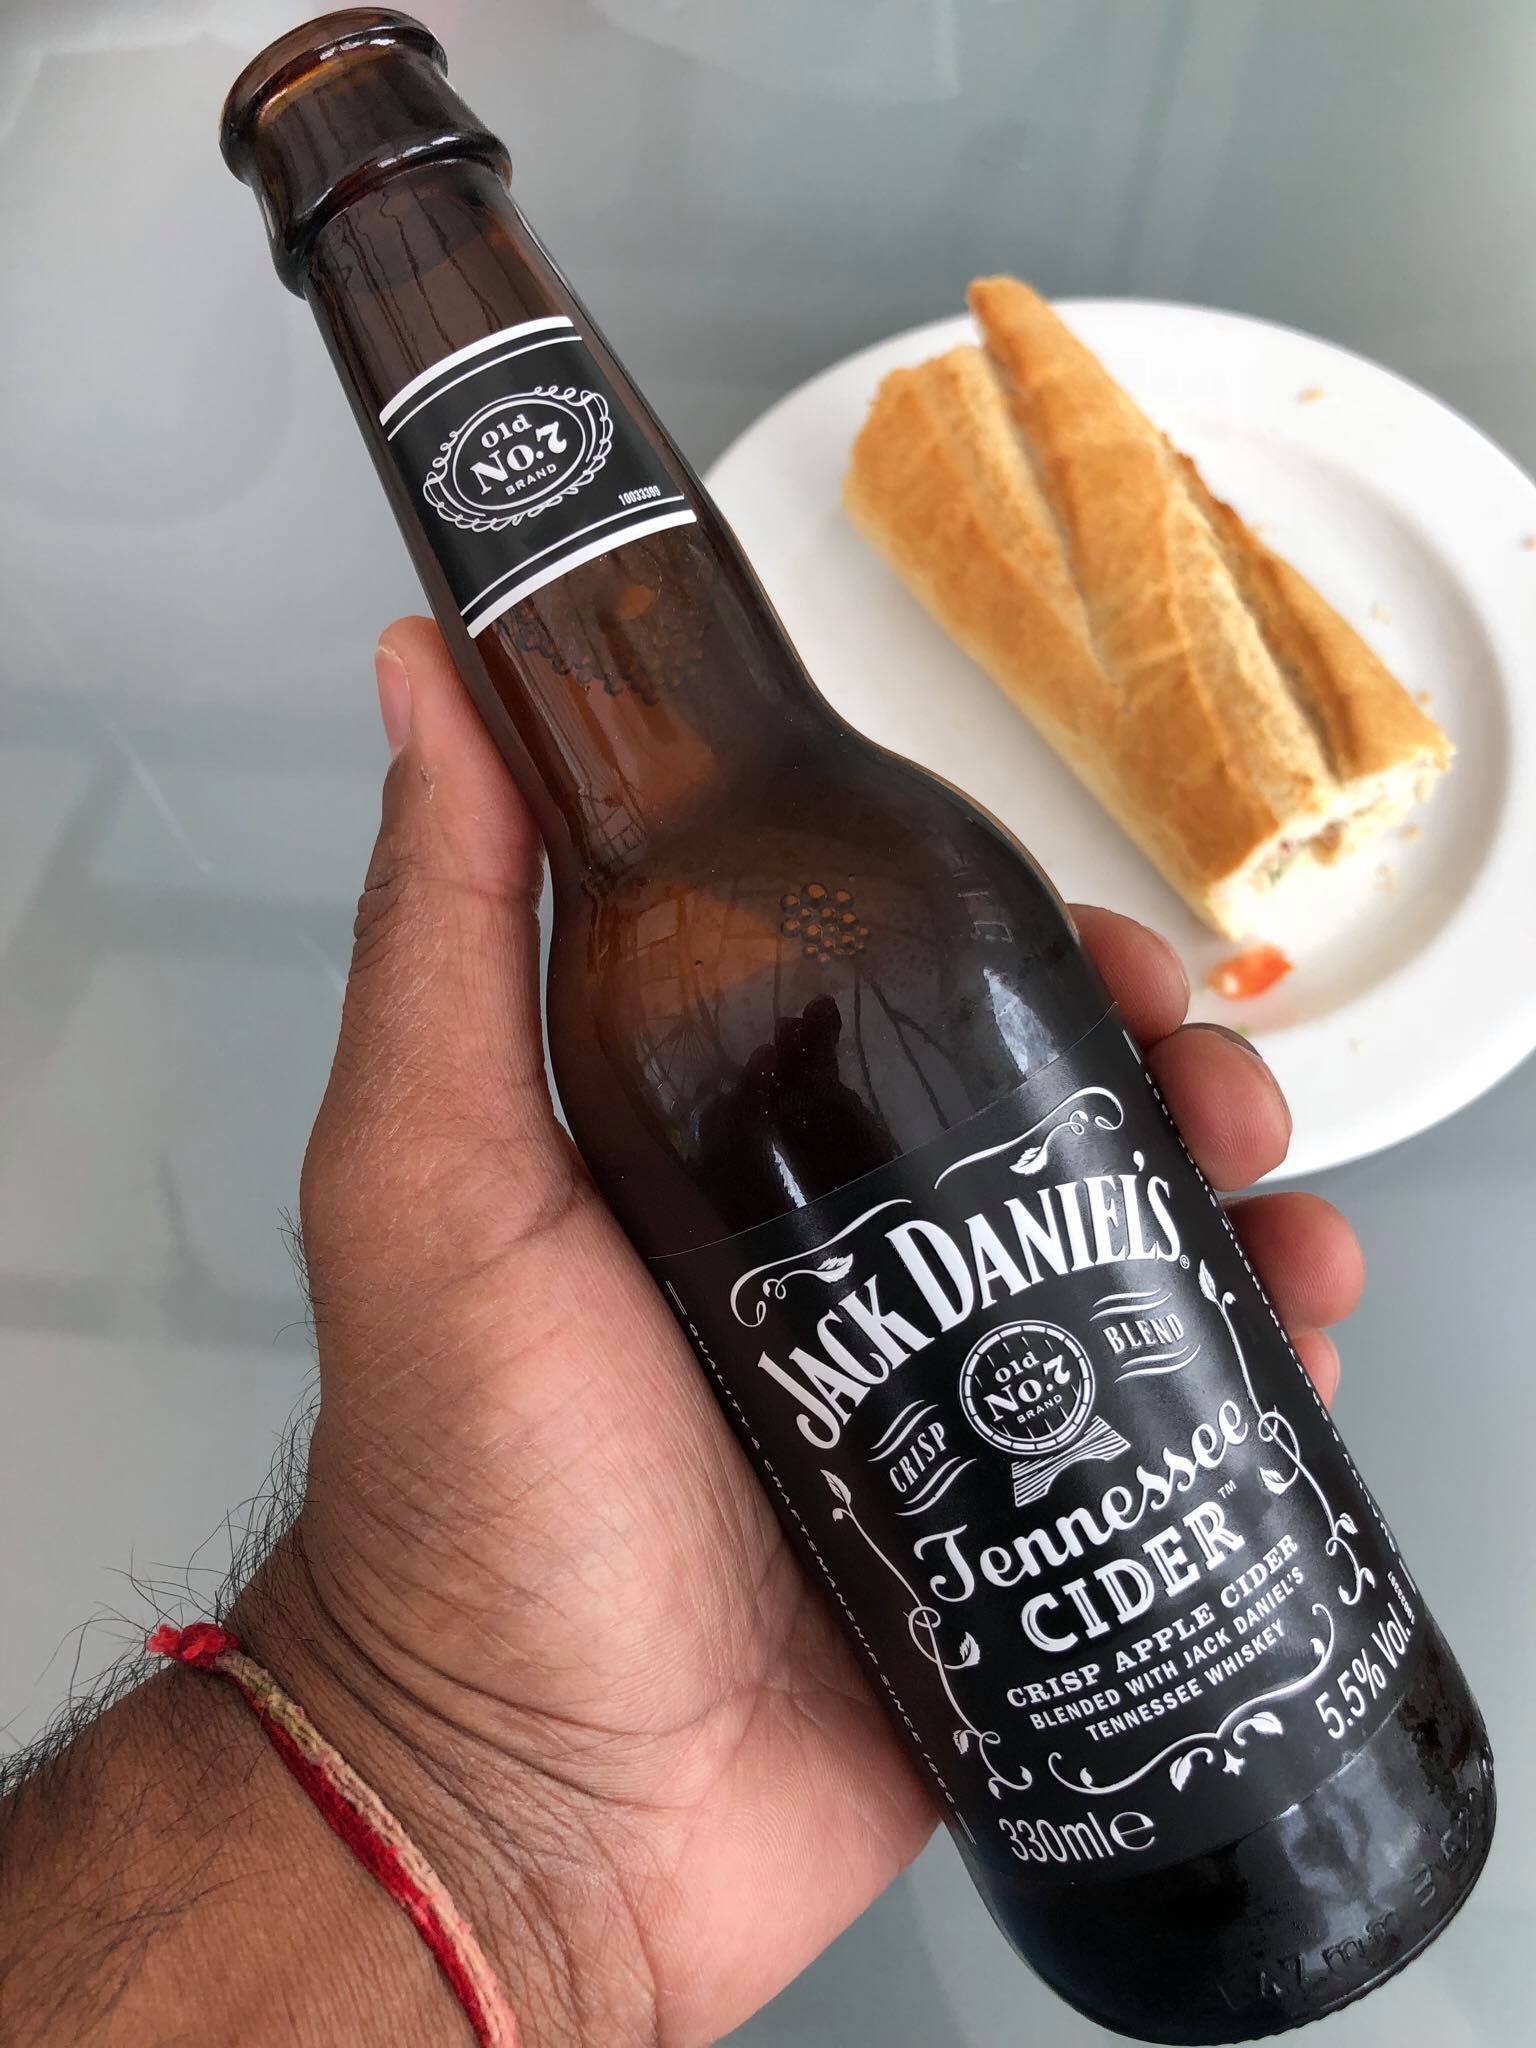 Jack Daniel’s Tennessee Cider
